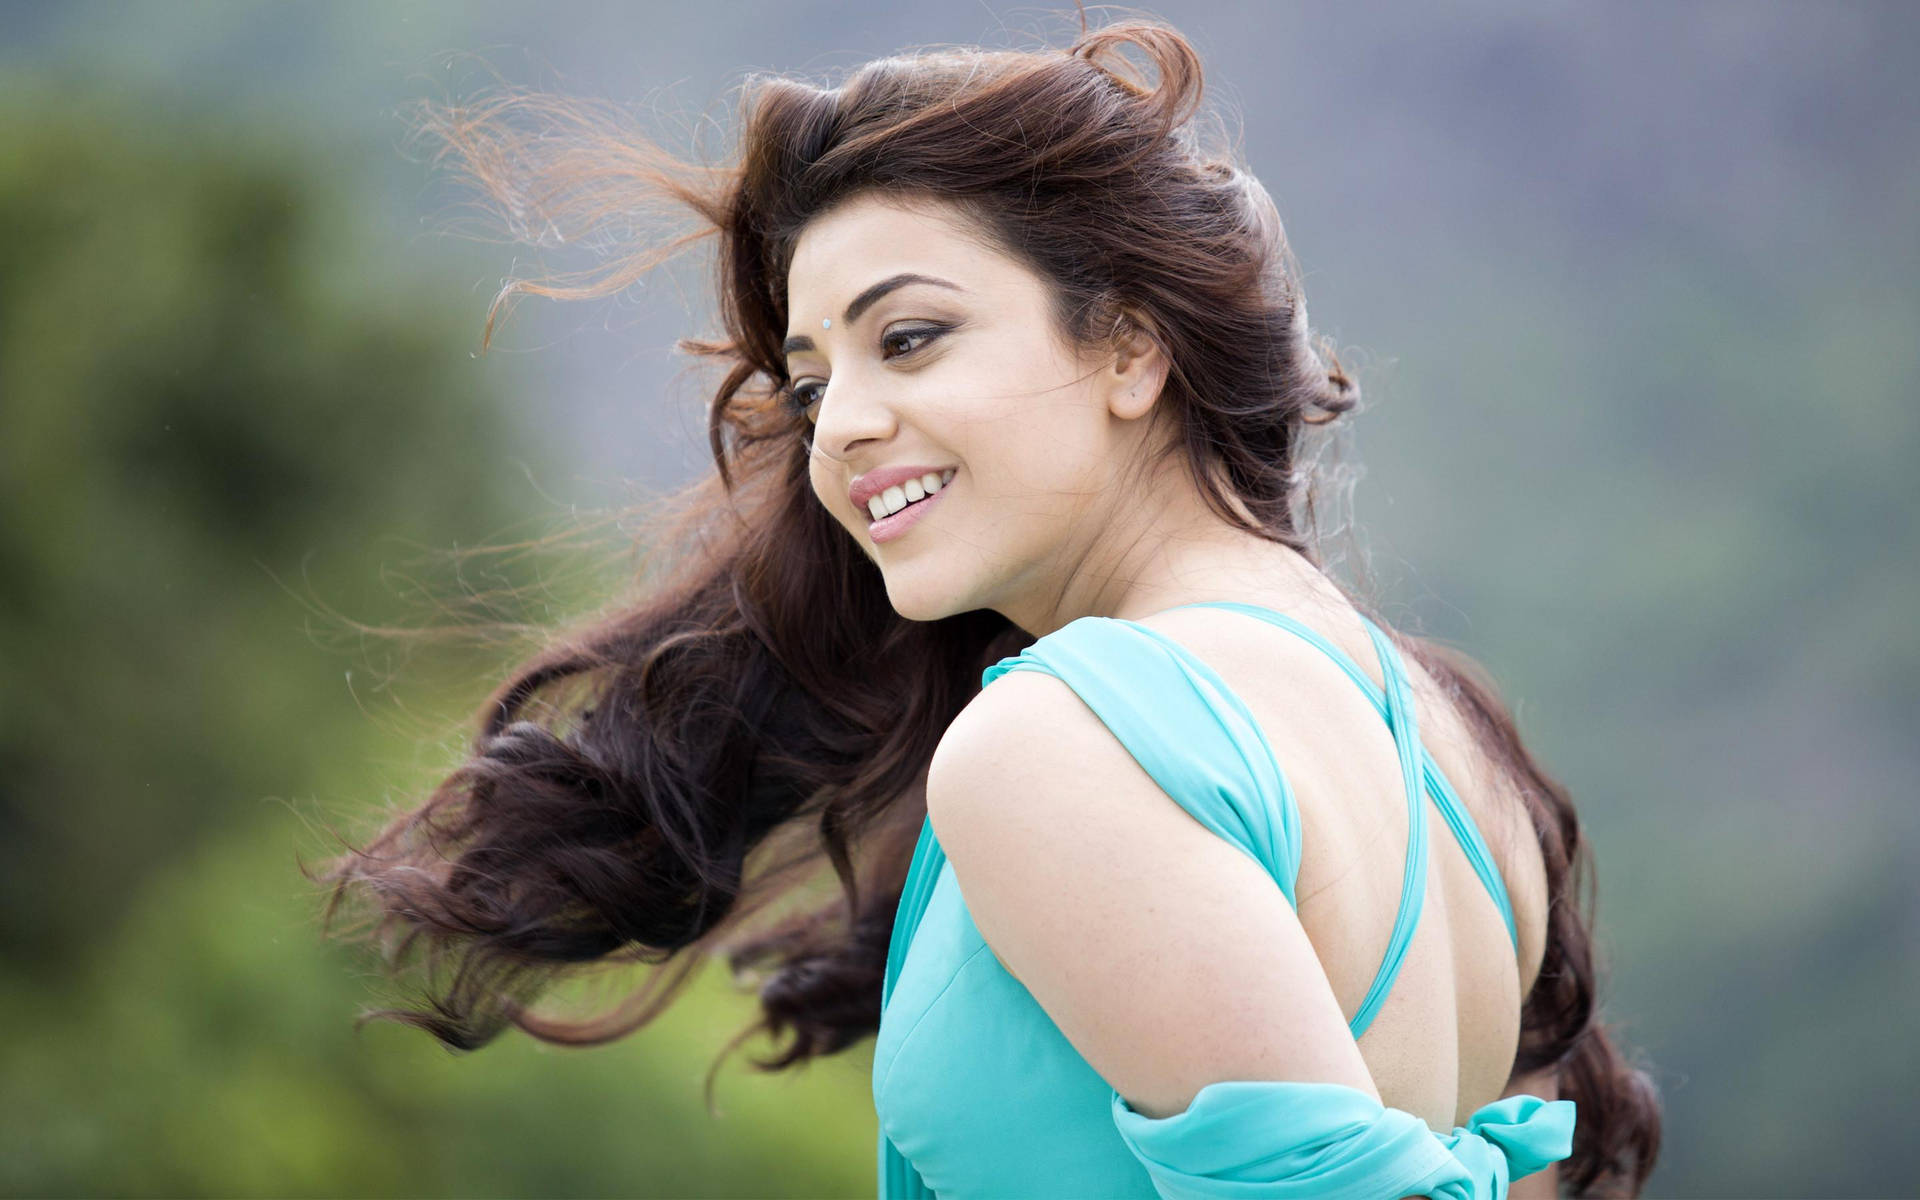 Stunning Hd Image Of Actress Kajal Agarwal With Flowing Hair